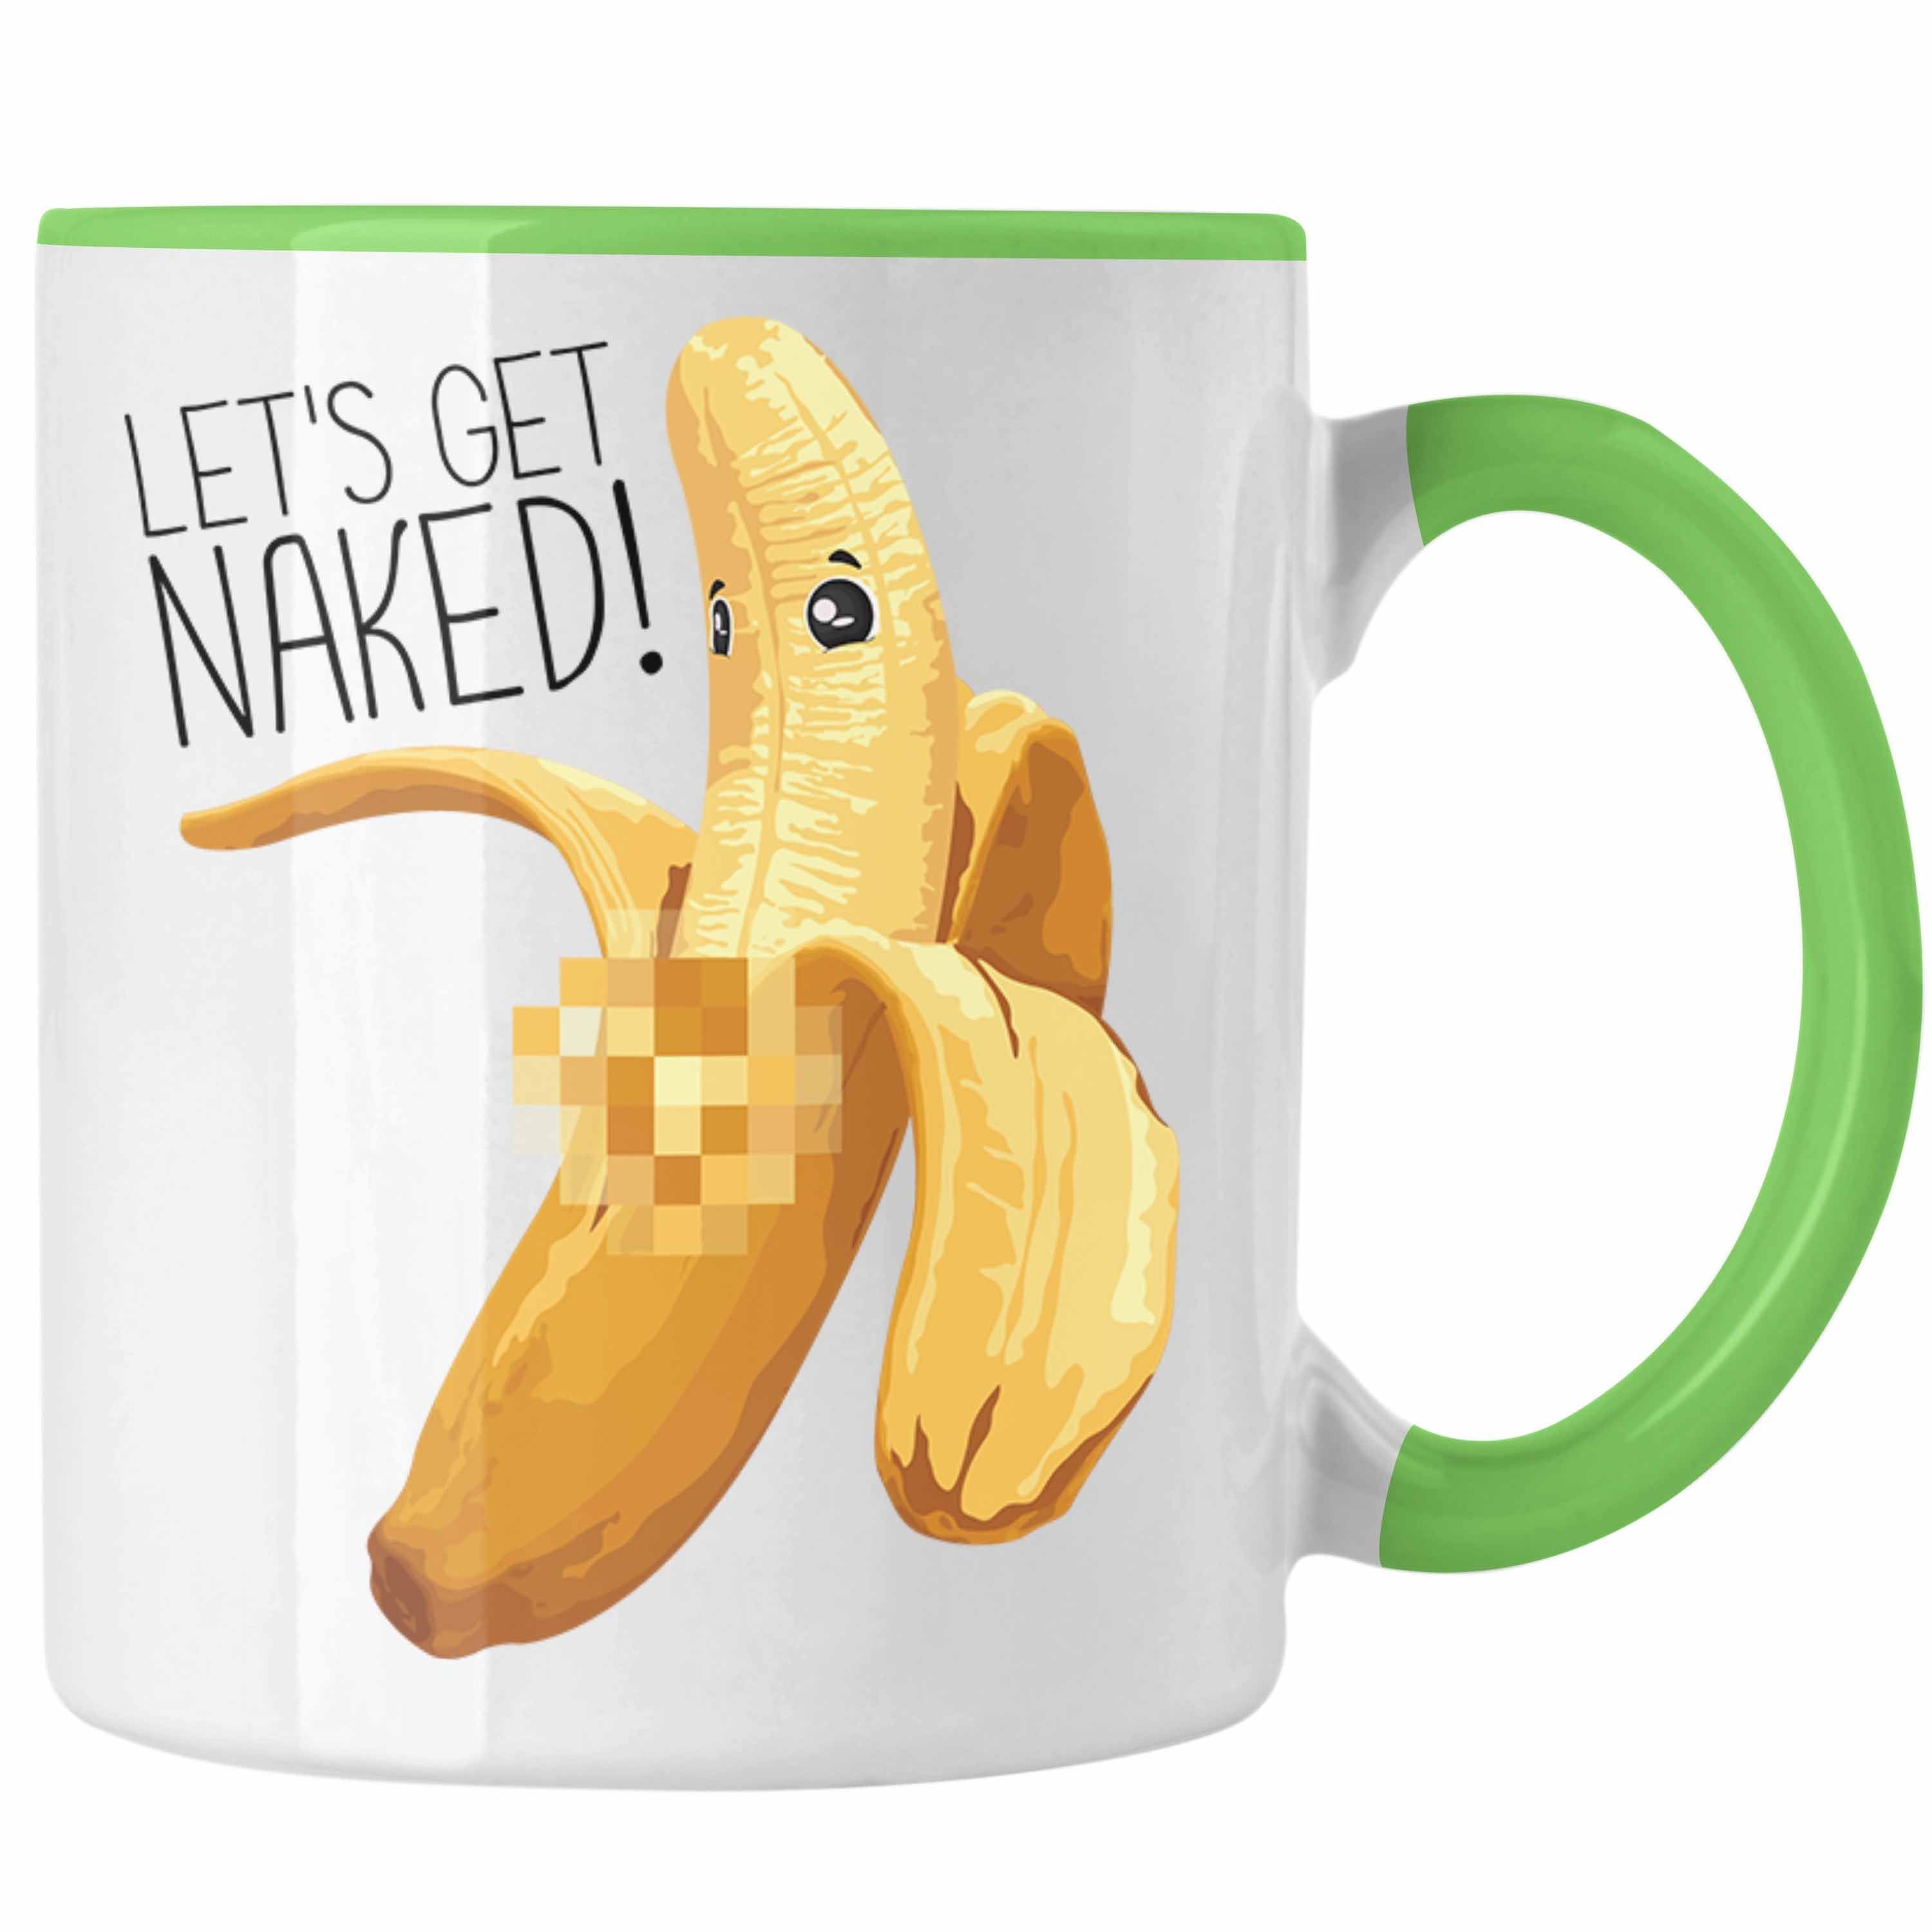 Trendation Tasse Banane Lets Get Erwachsener Striptease Bech Geschenk Grün Naked Tasse Humor